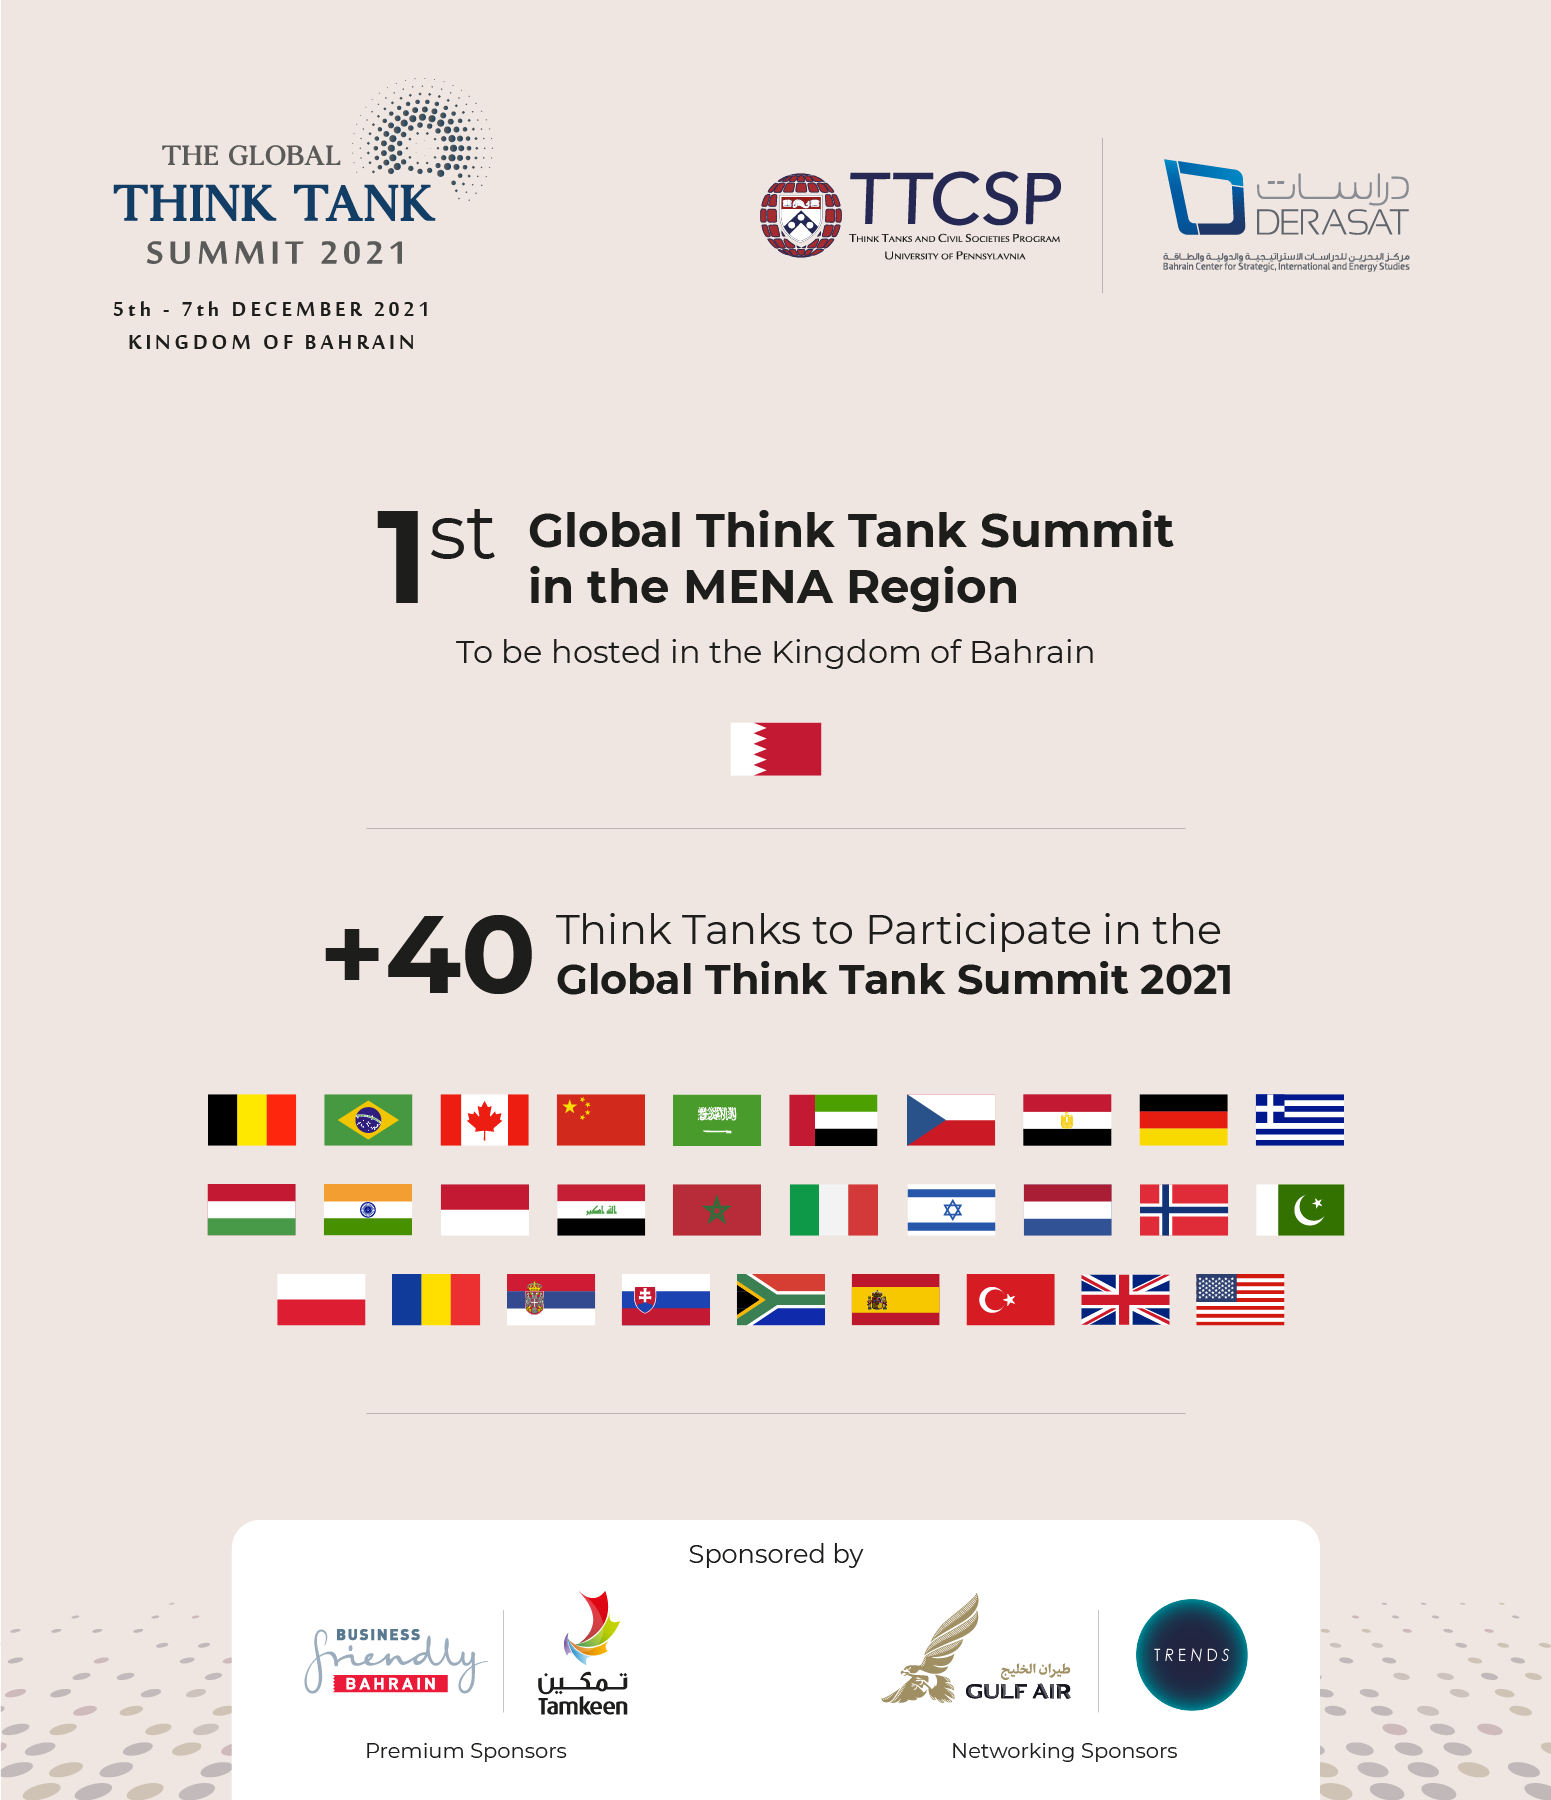 The Global Think Tank Summit